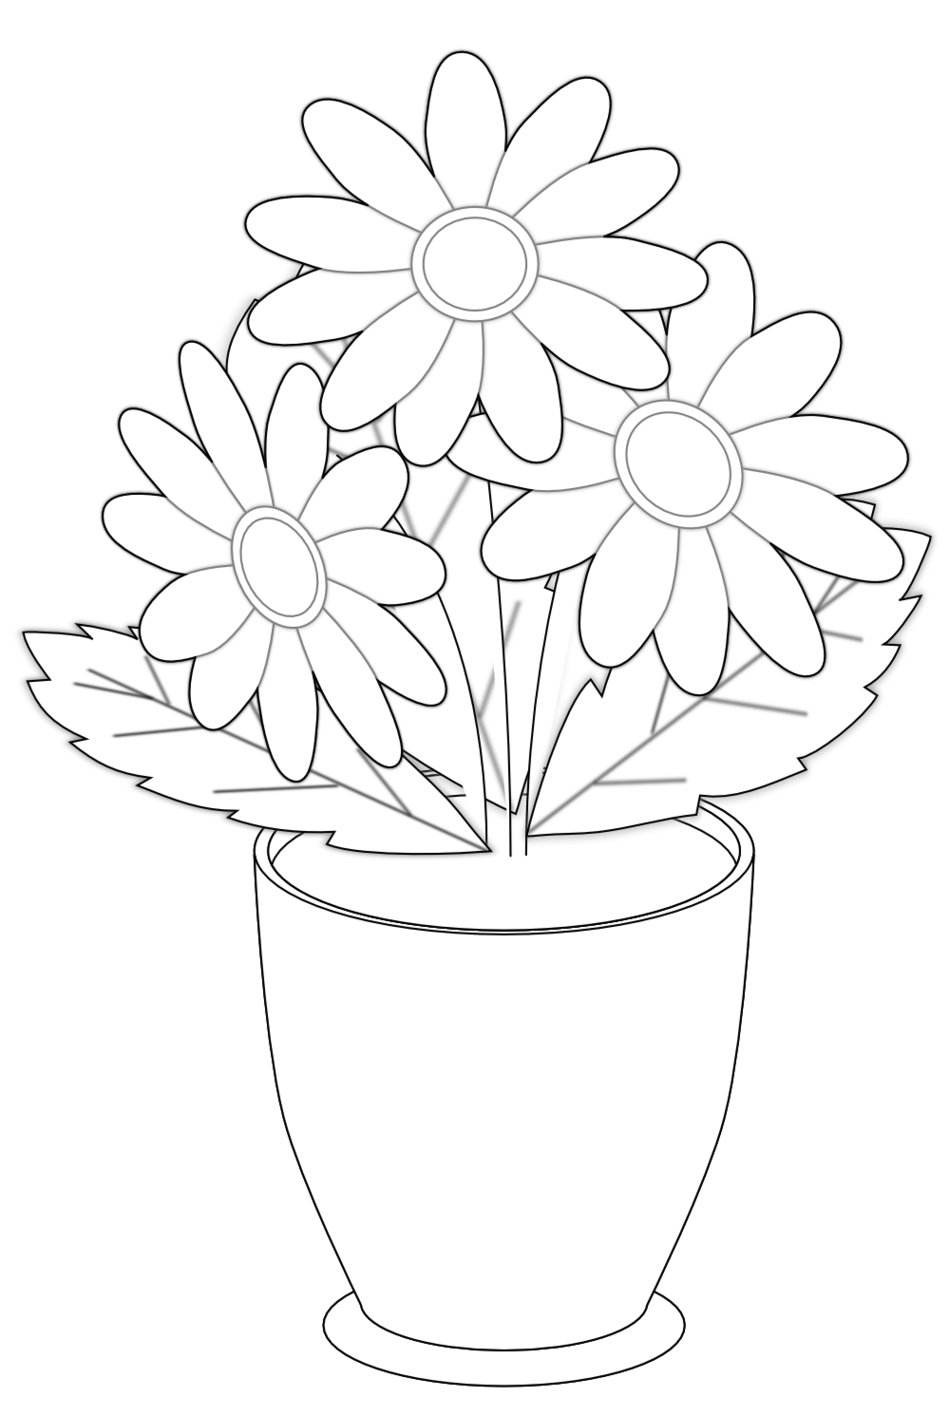 Daisies clipart daisy bouquet. Drawn flower jar free